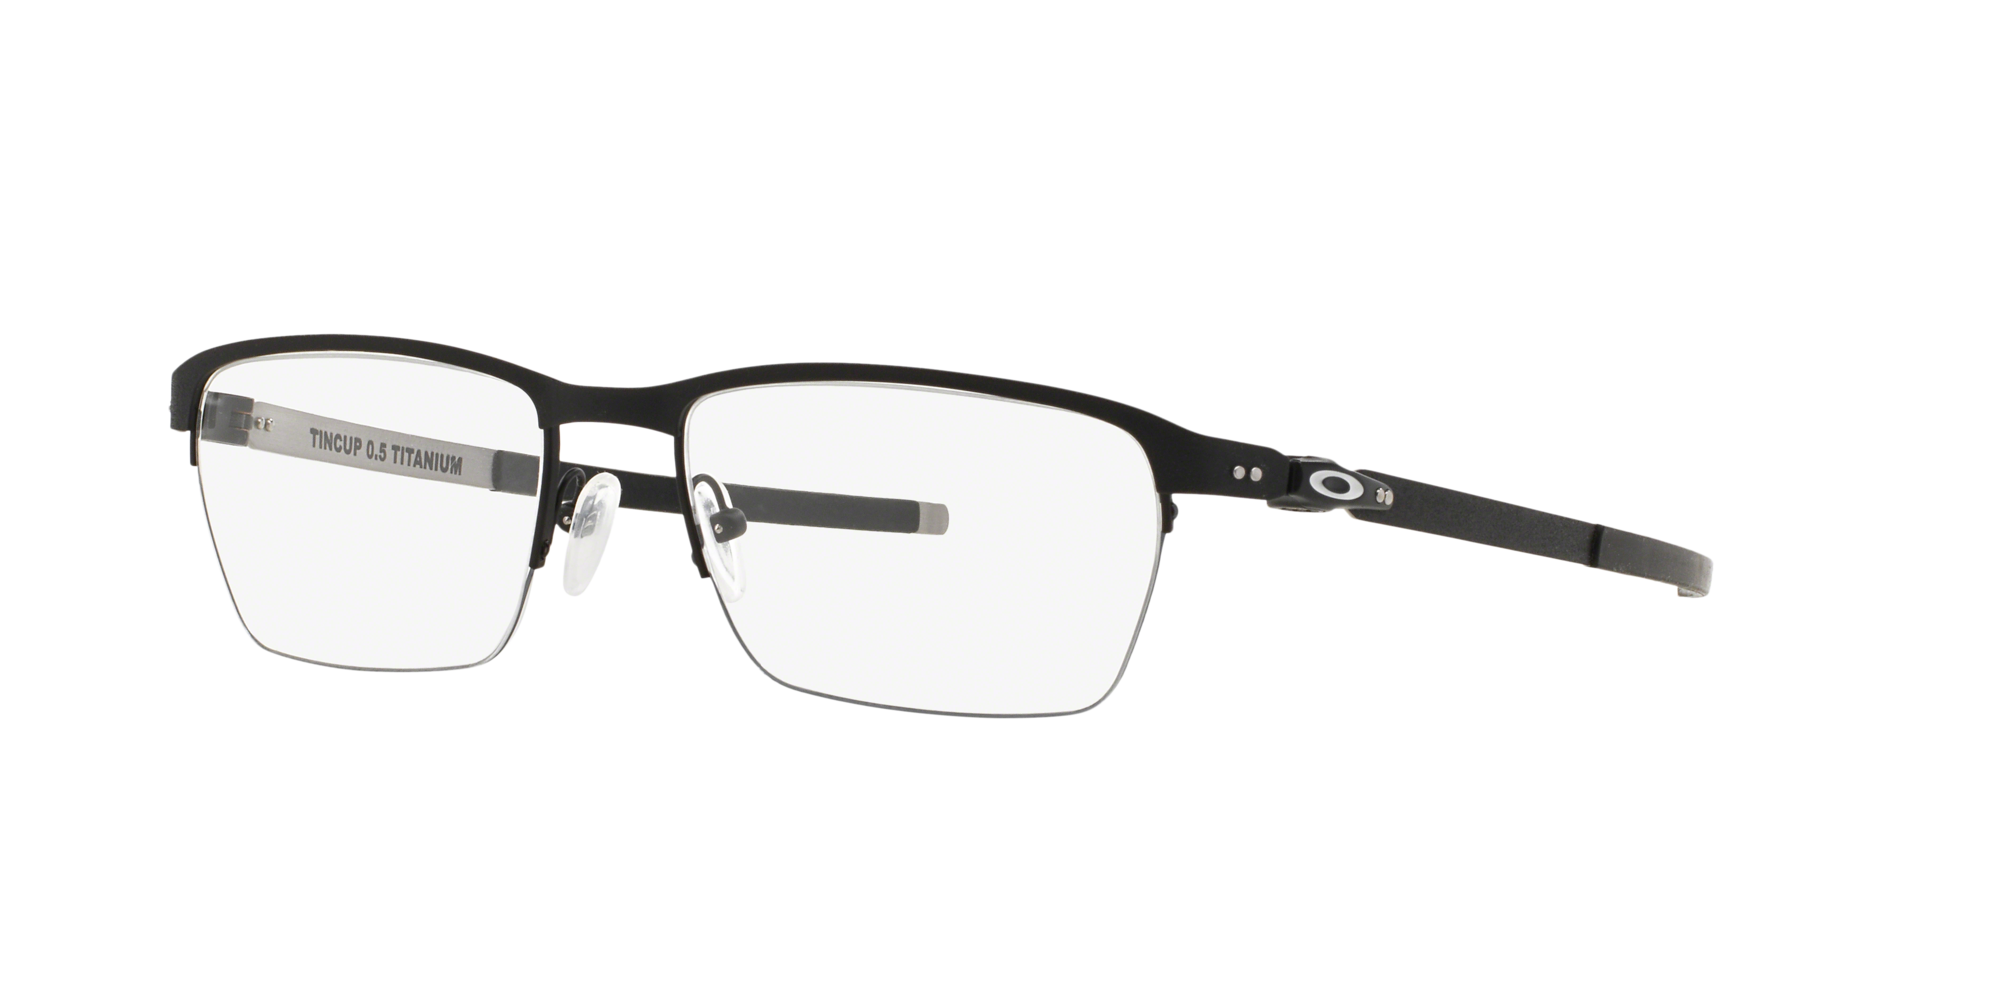 Angle_Left01 Oakley TinCup OX 5099 Glasses Transparent / Black